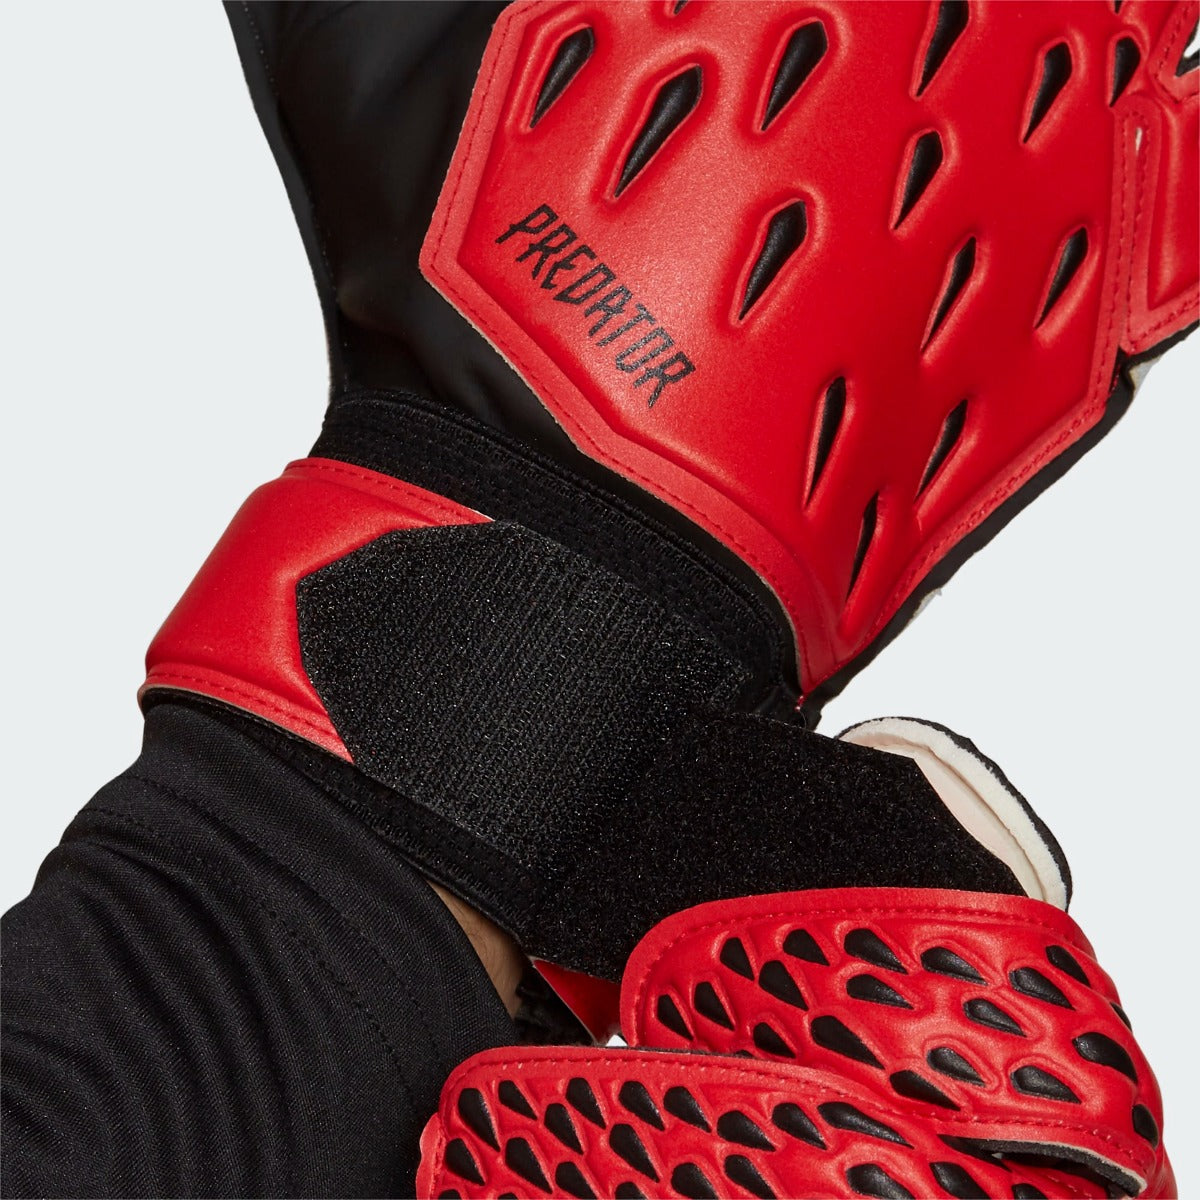 Adidas Predator Training Goalkeeper Gloves - Red-Black (Detail 1)